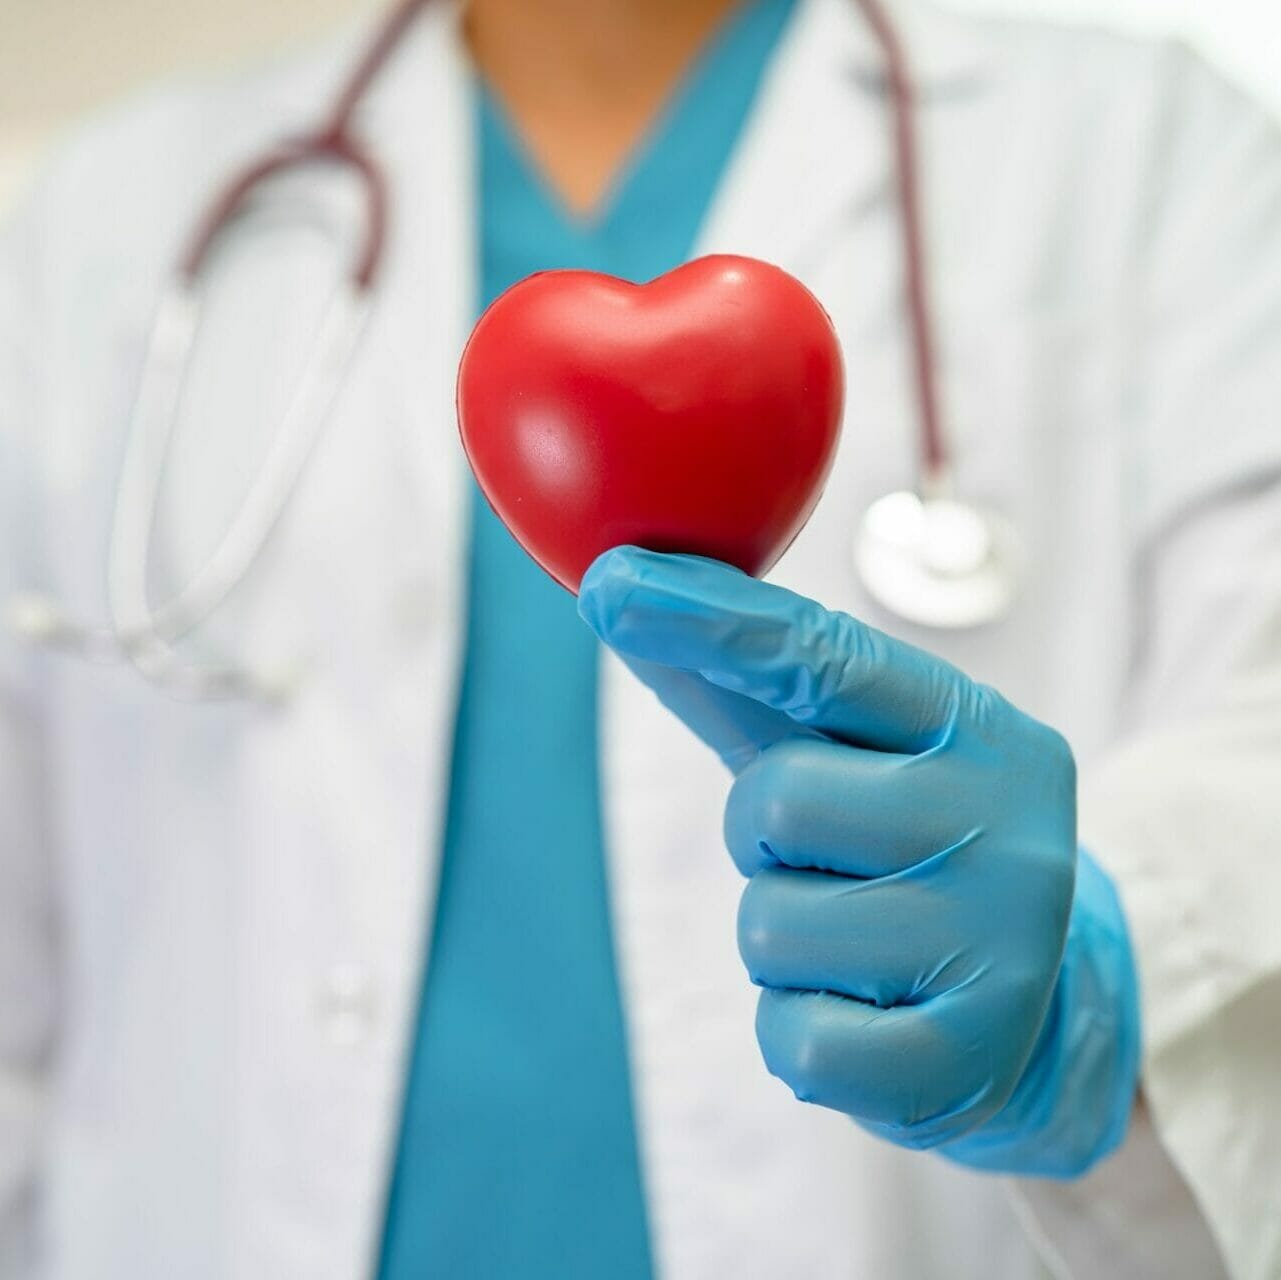 Doctor holding red heart in nursing hospital for good health.